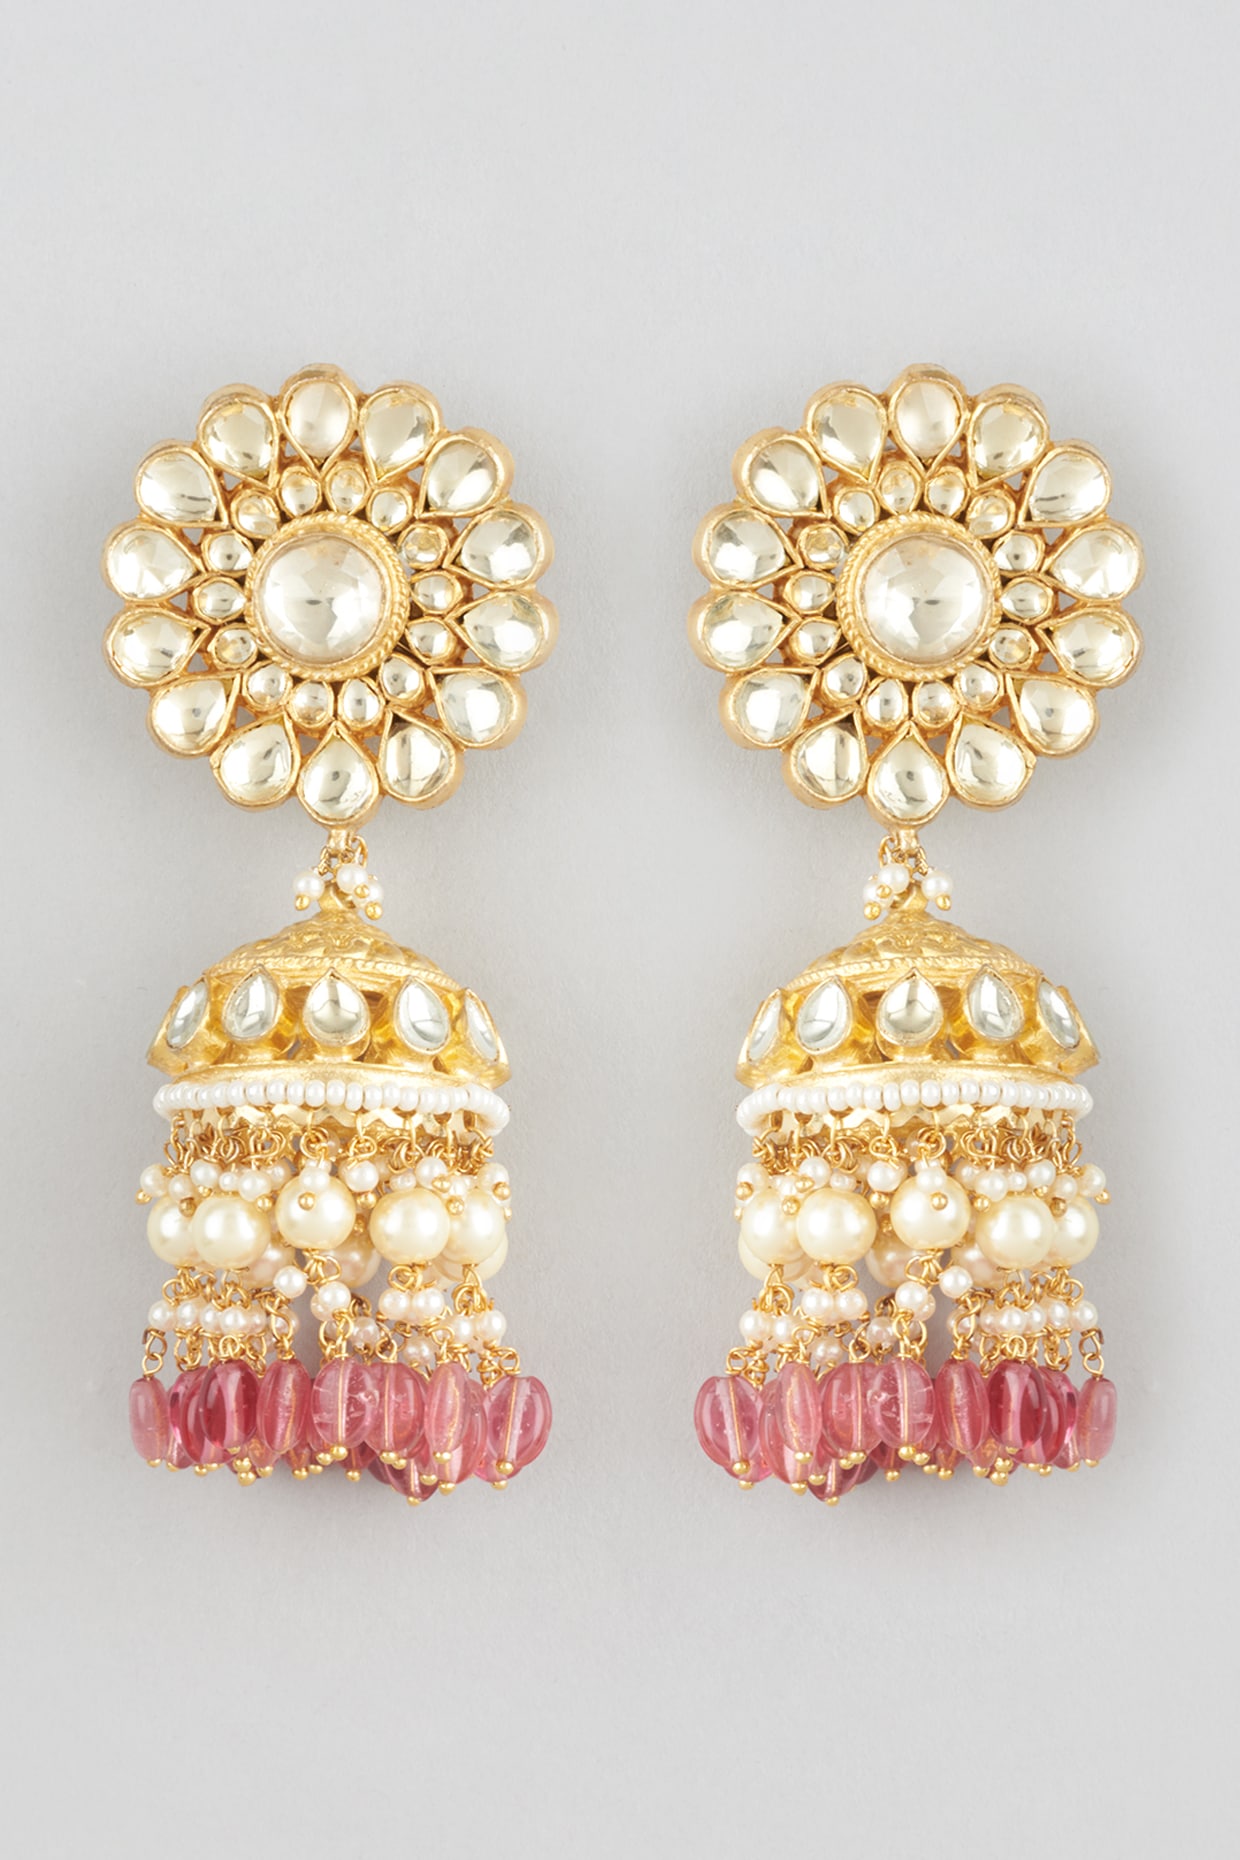 Buy Gold Polki Jhumki Earrings with Pearls Online at Jayporecom